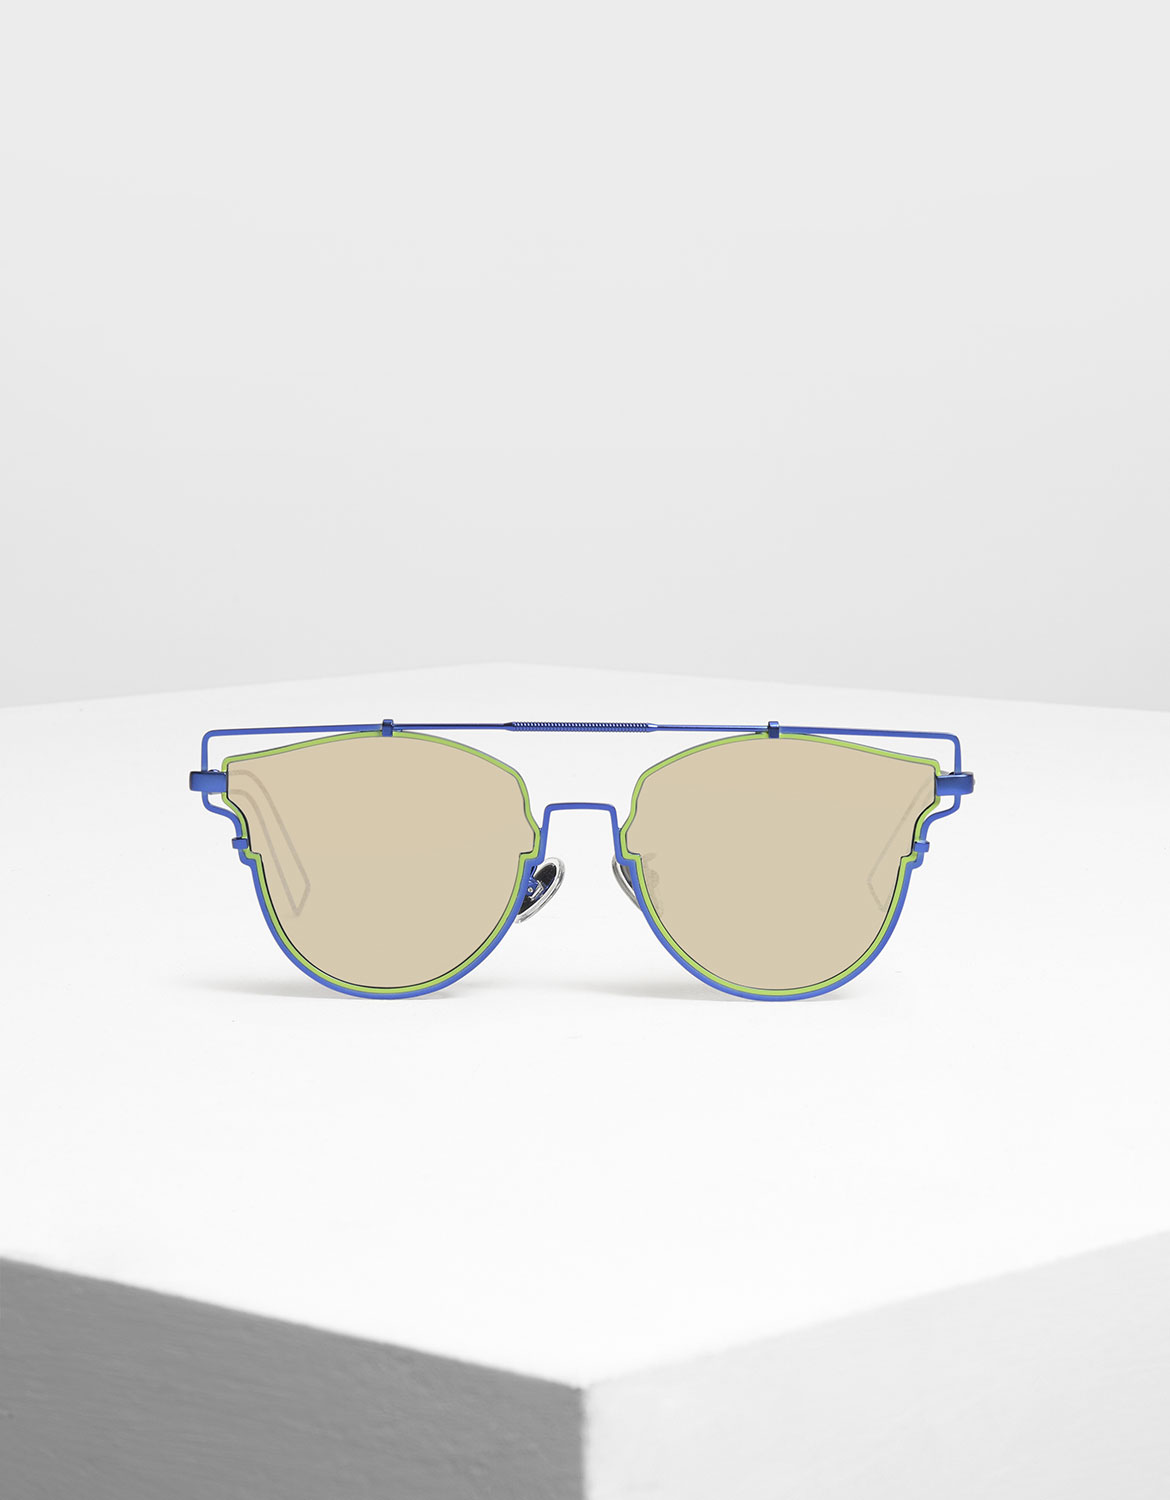 Wire Frame Geometric Sunglasses